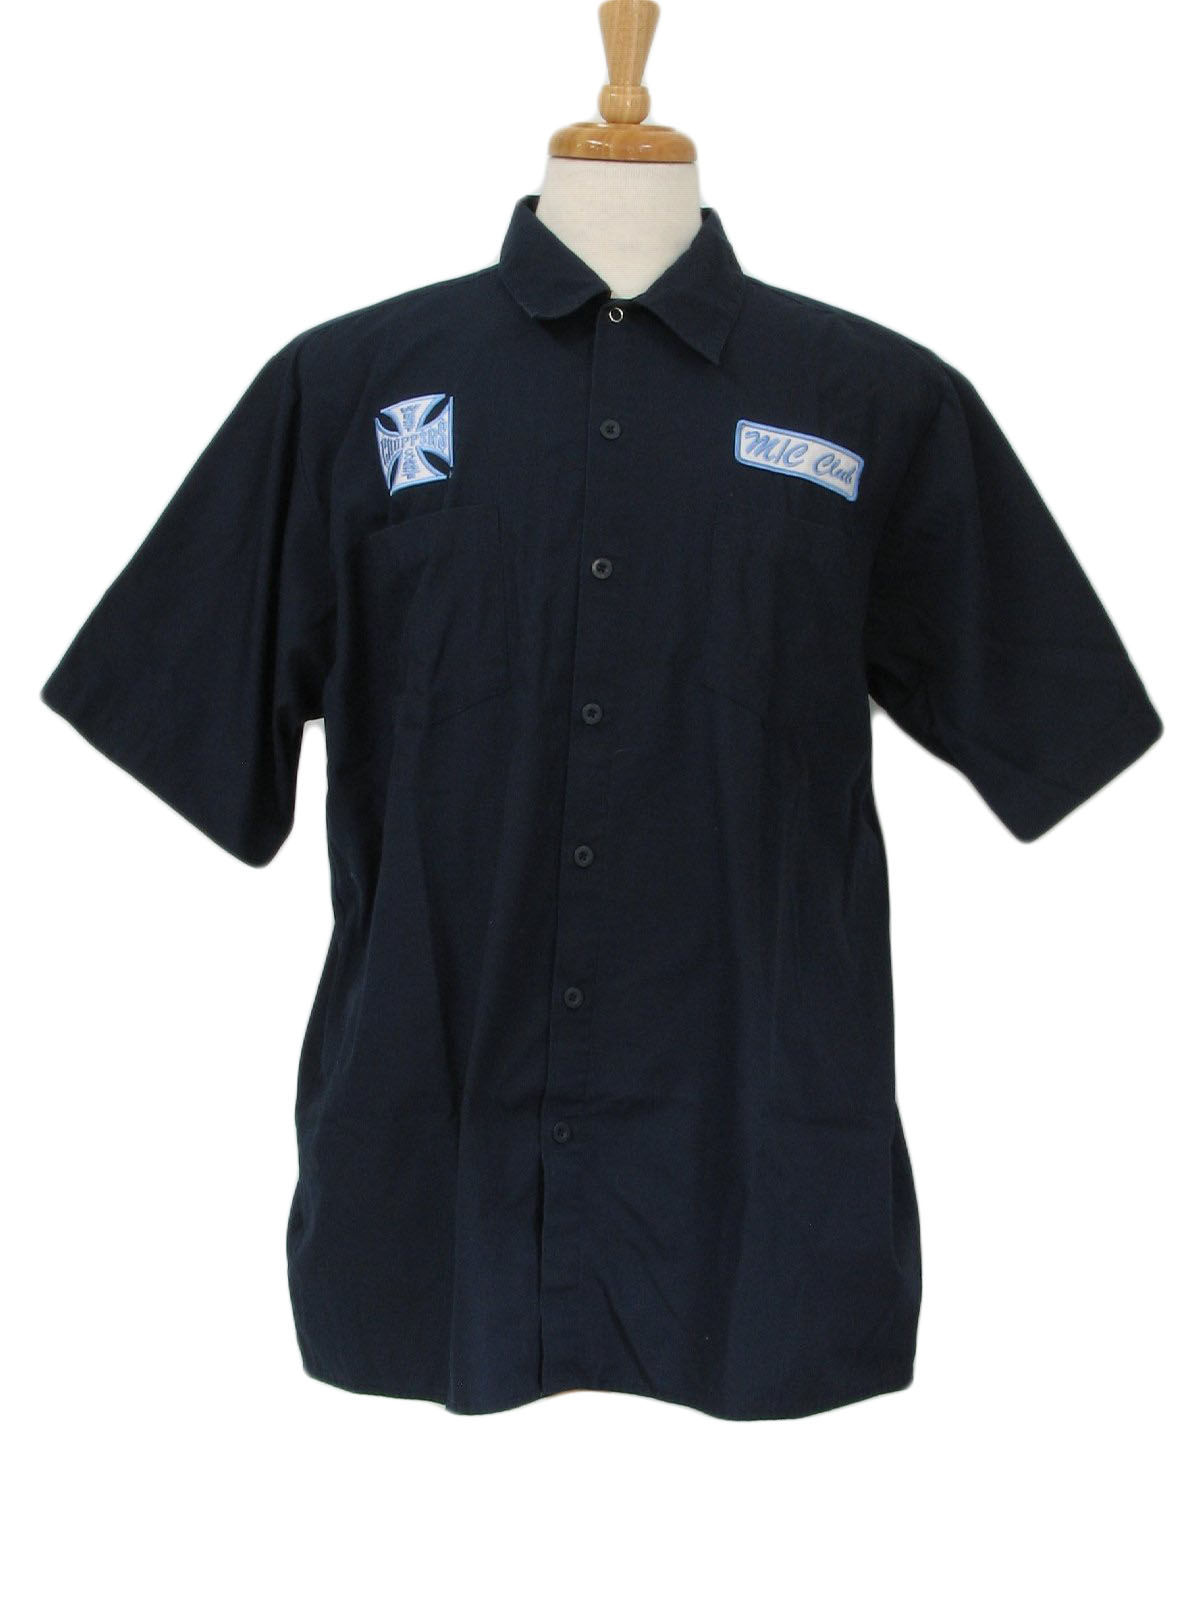 Retro 1990's Shirt (Jesse James Work Wear) : 90s -Jesse James Work Wear ...